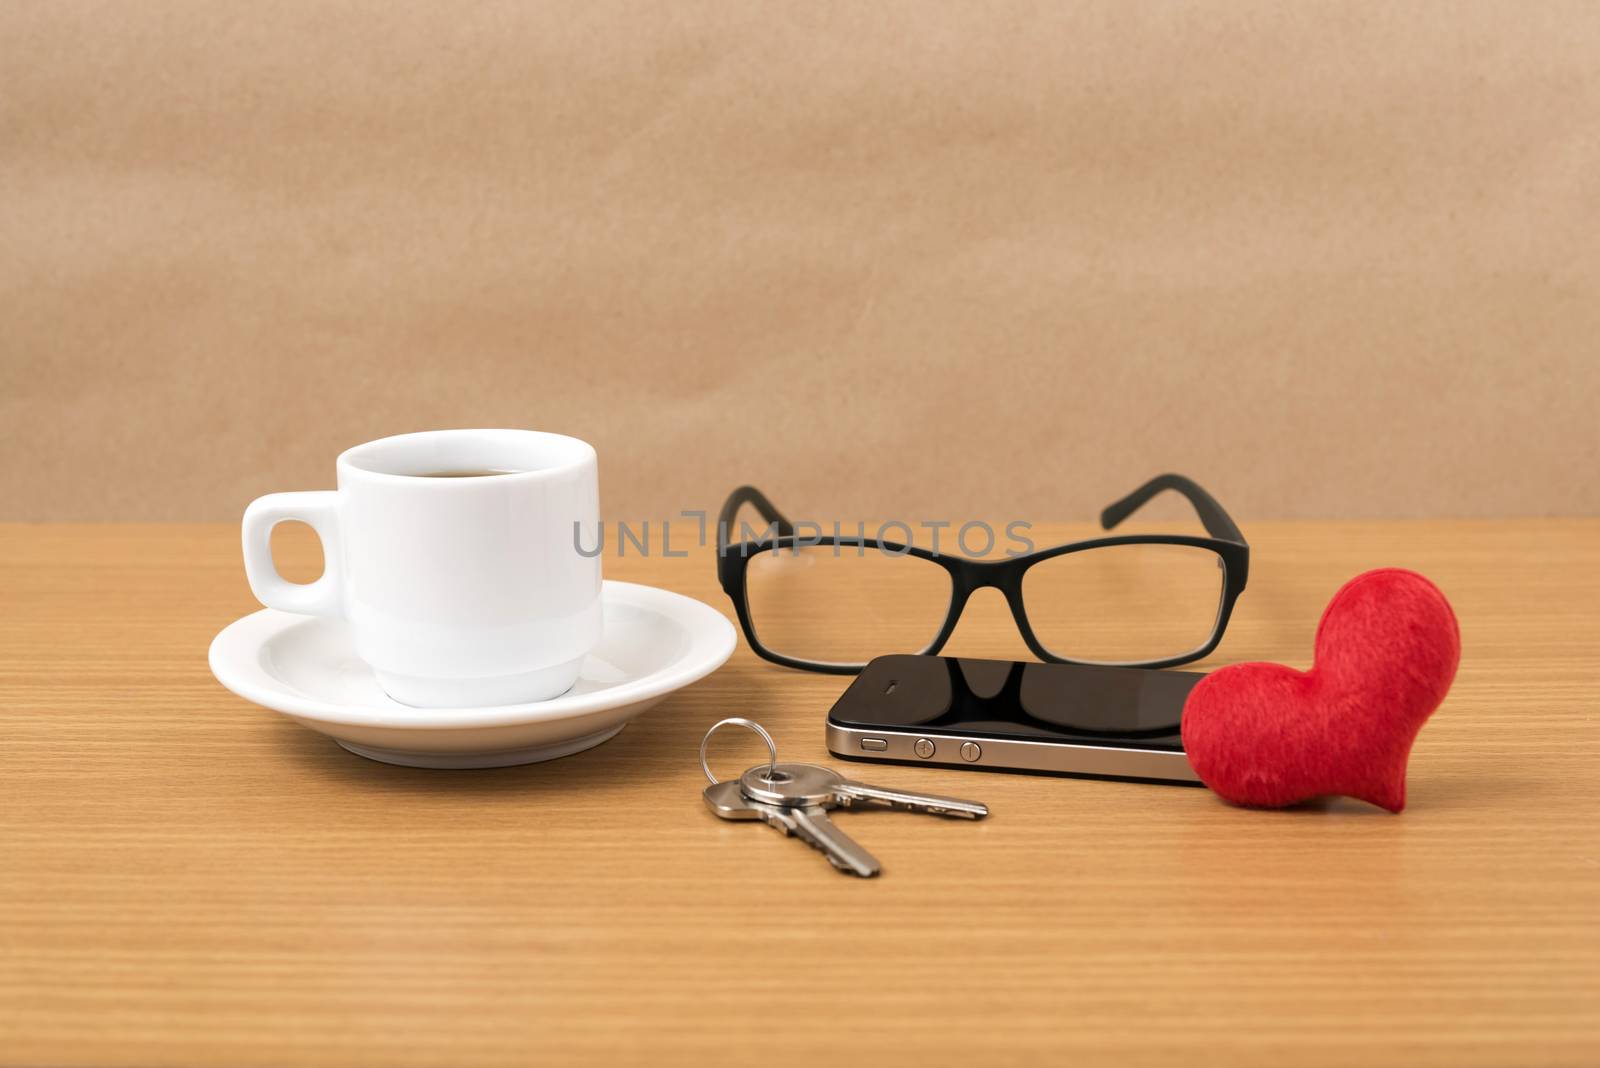 coffee,phone,eyeglasses and key by ammza12